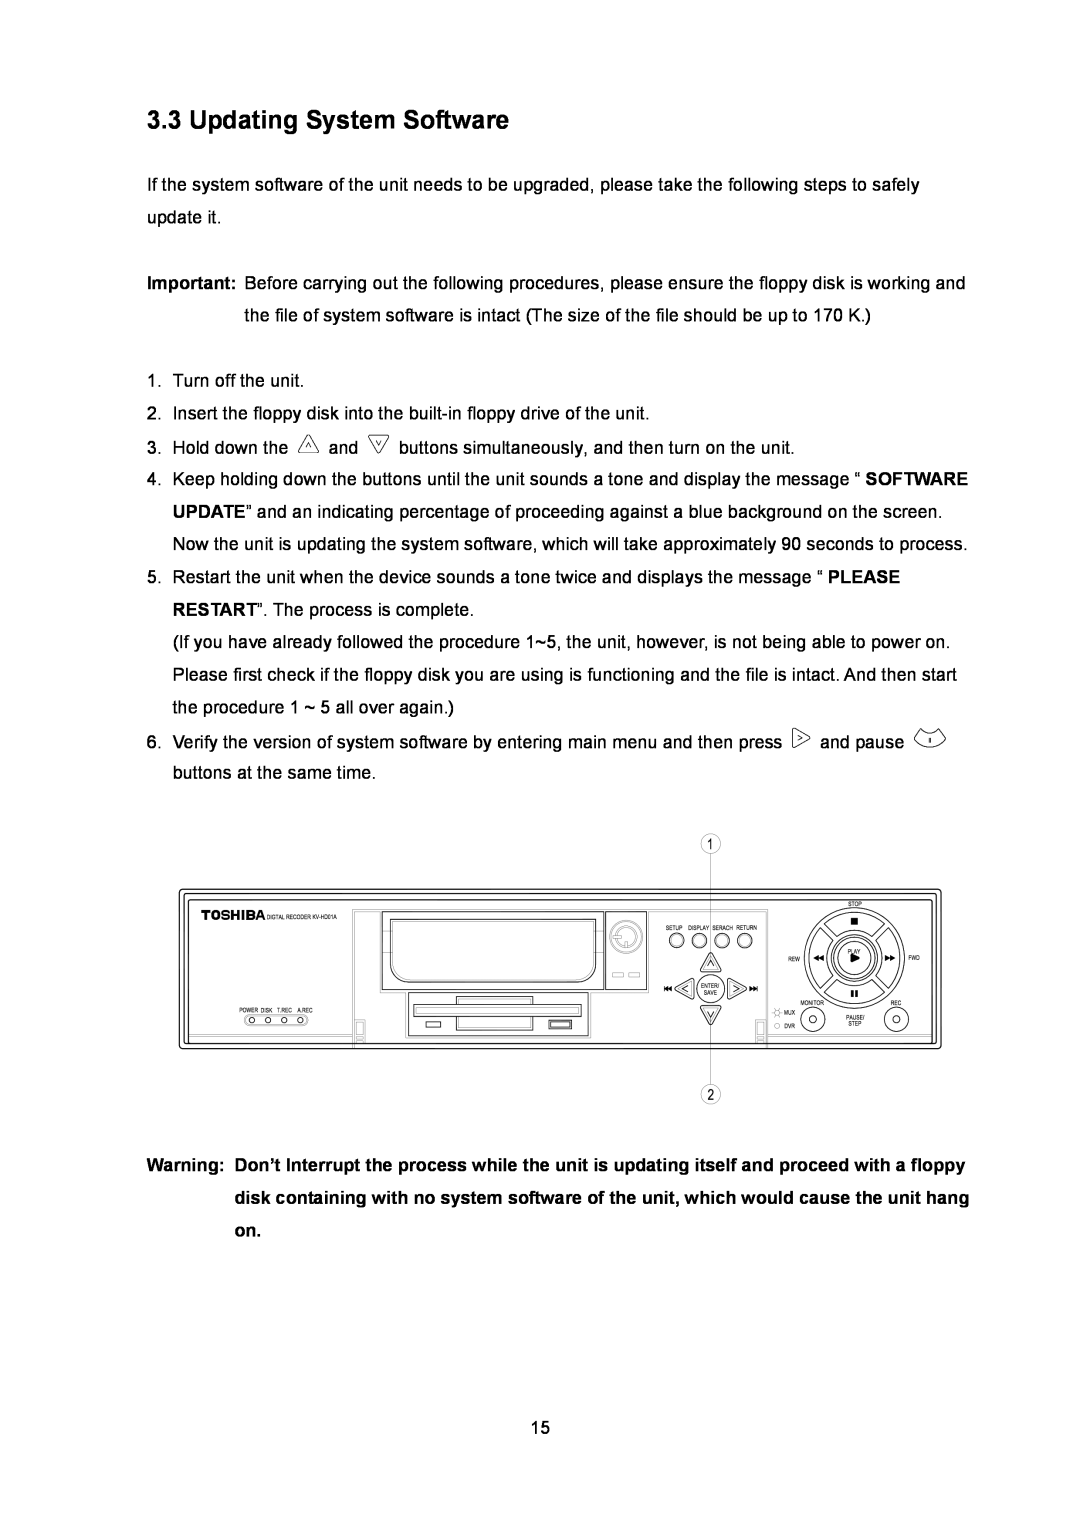 Toshiba KV-HD01A manual Updating System Software 